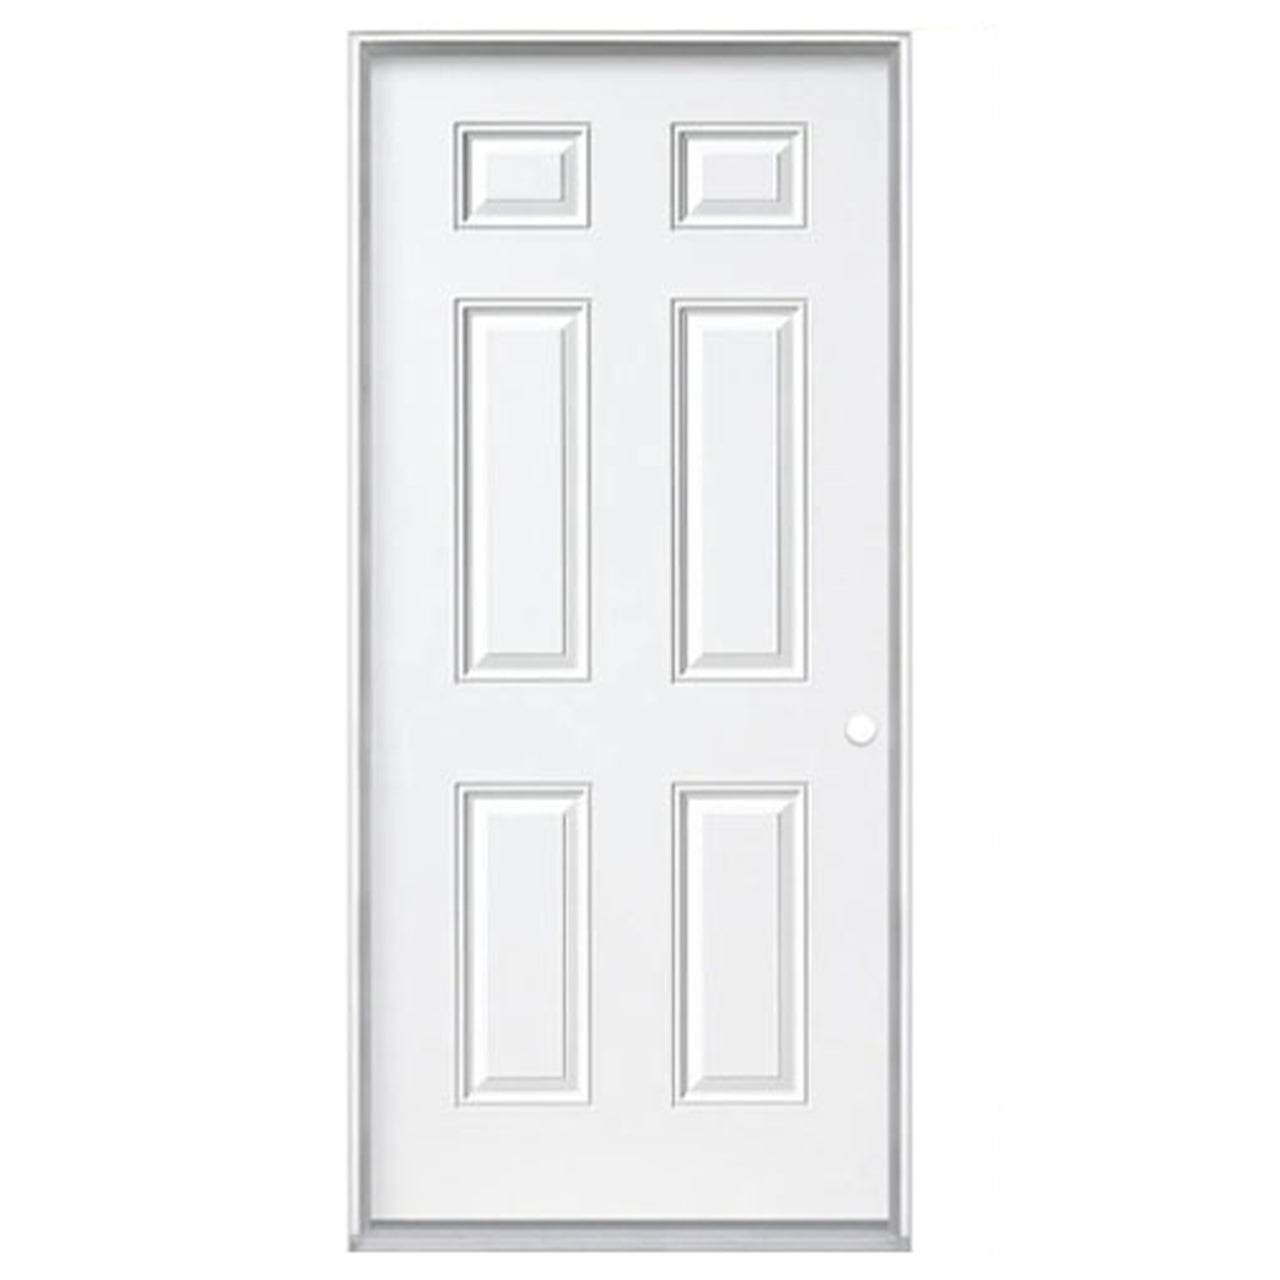 Build-It-Better Exterior Doors Materials